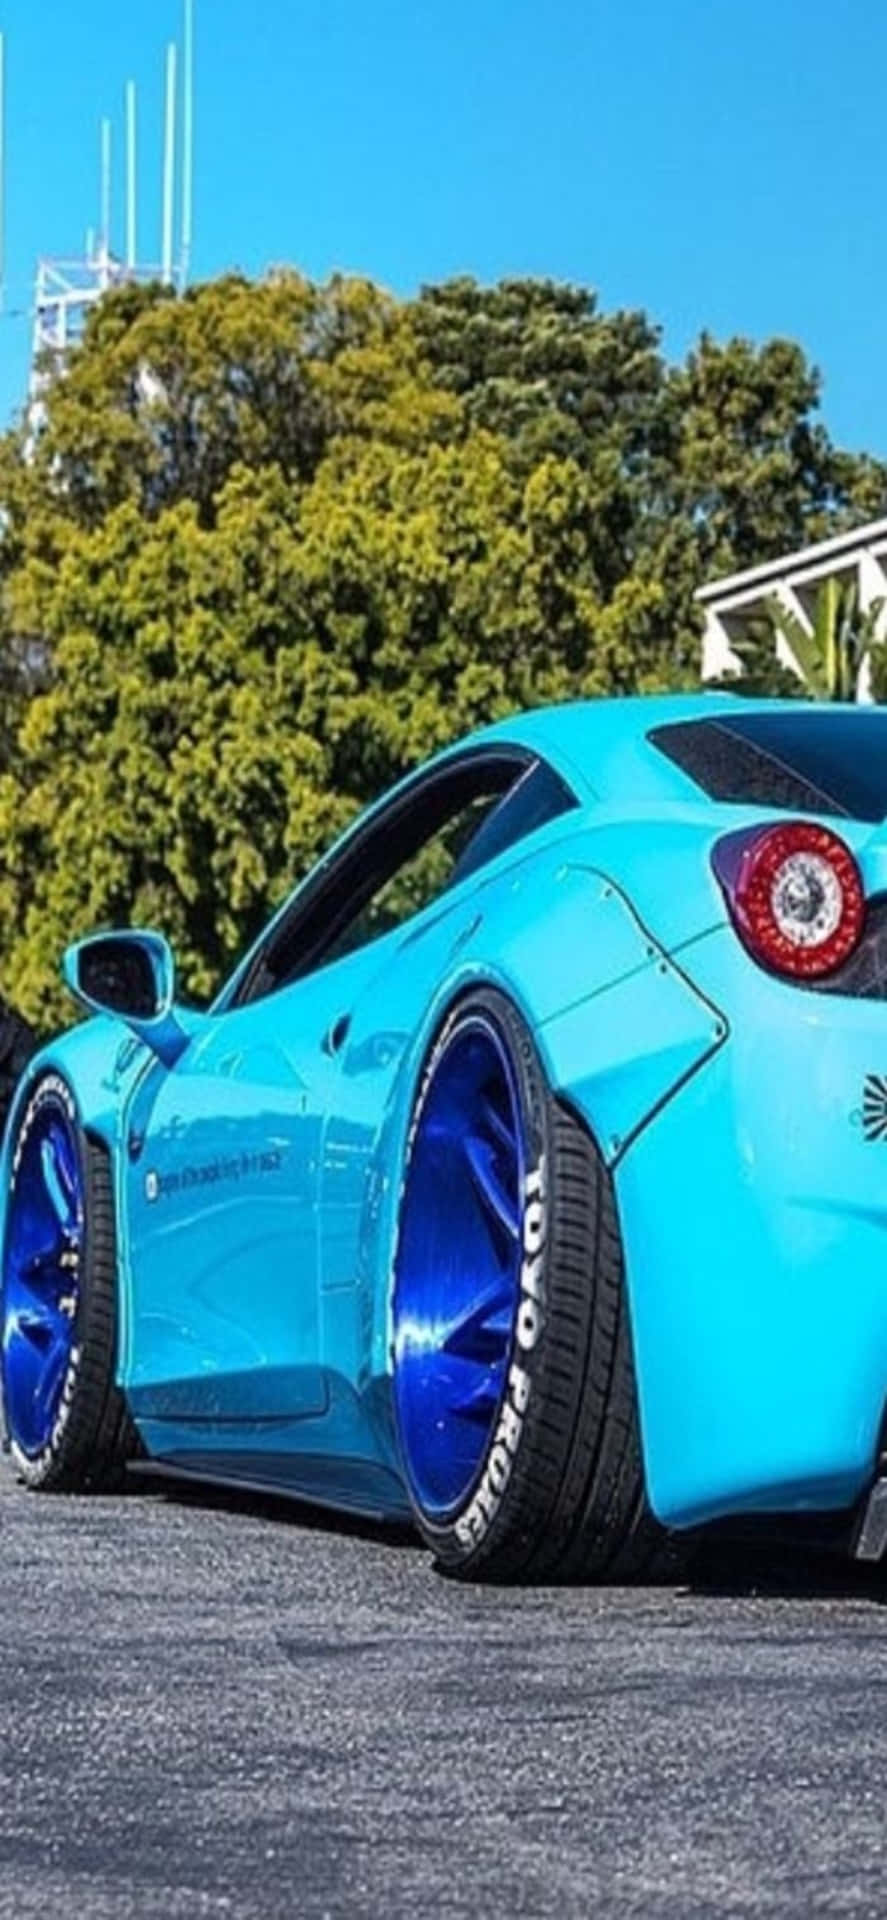 Papelde Parede Ferrari Para Iphone Xs Max Na Cor Azul Claro Com O Modelo Ferrari 458.